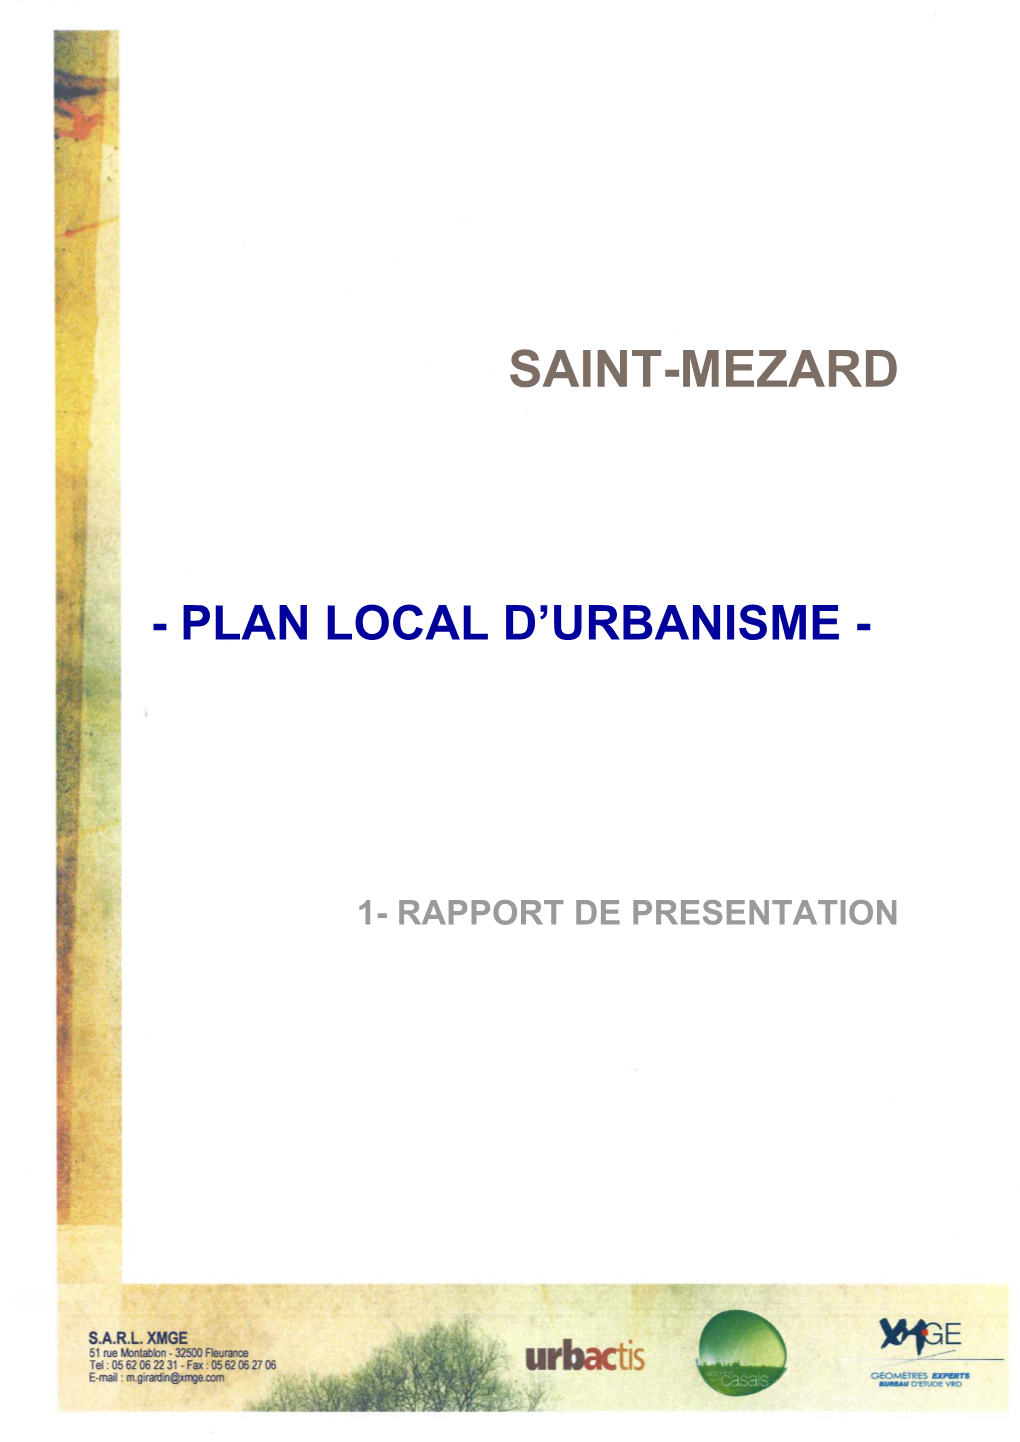 Saint-Mezard